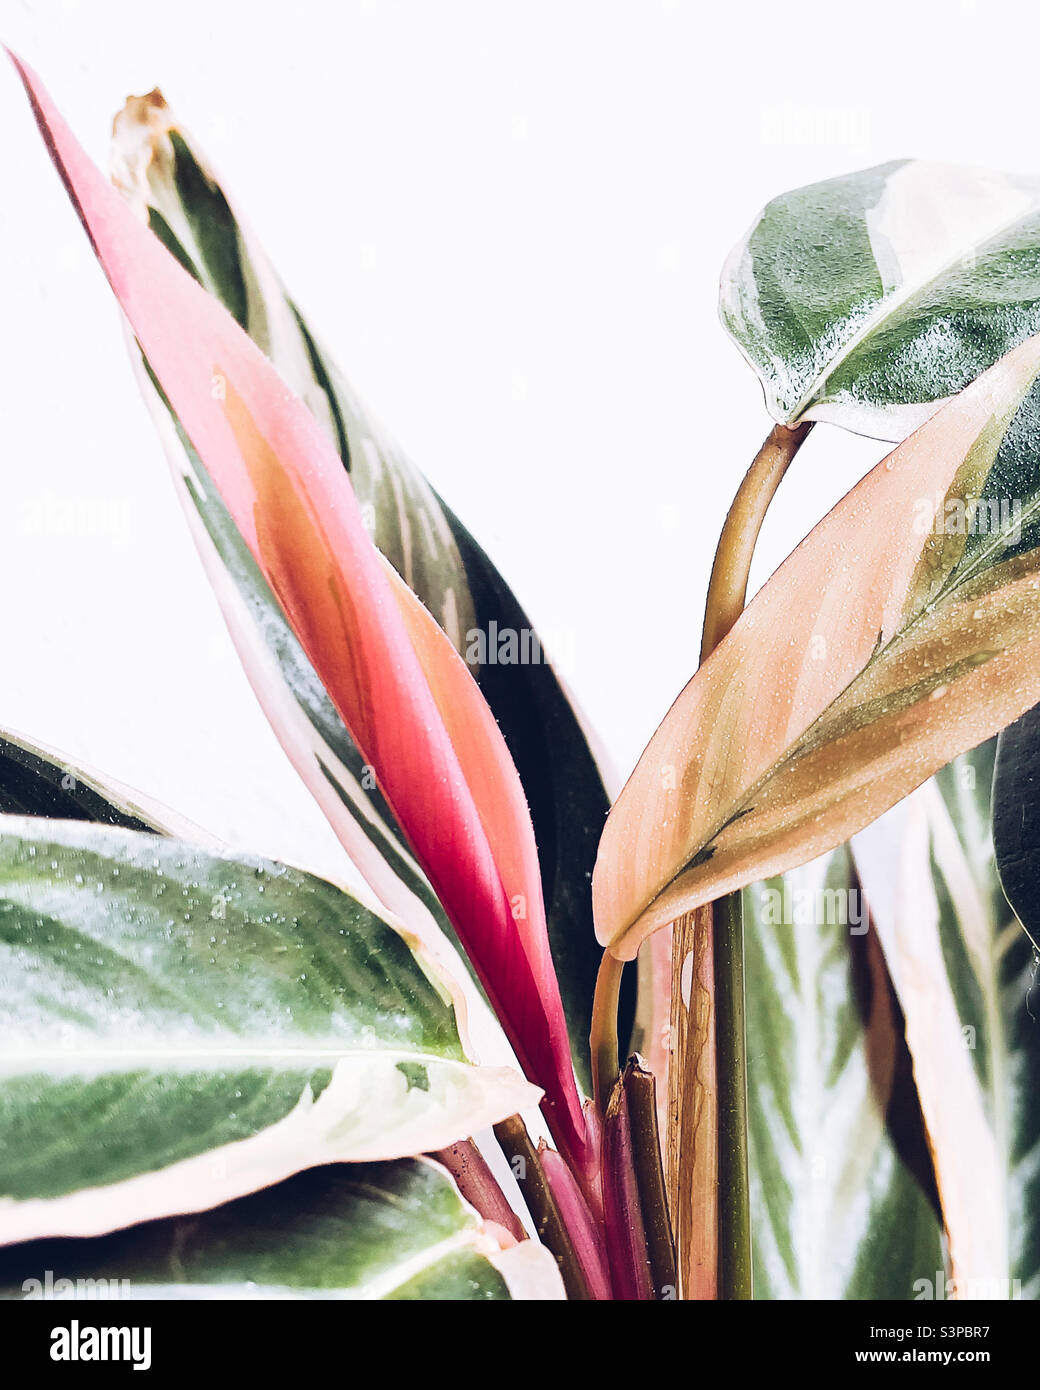 Colorful houseplant - Stromanthe Triostar - detail Stock Photo